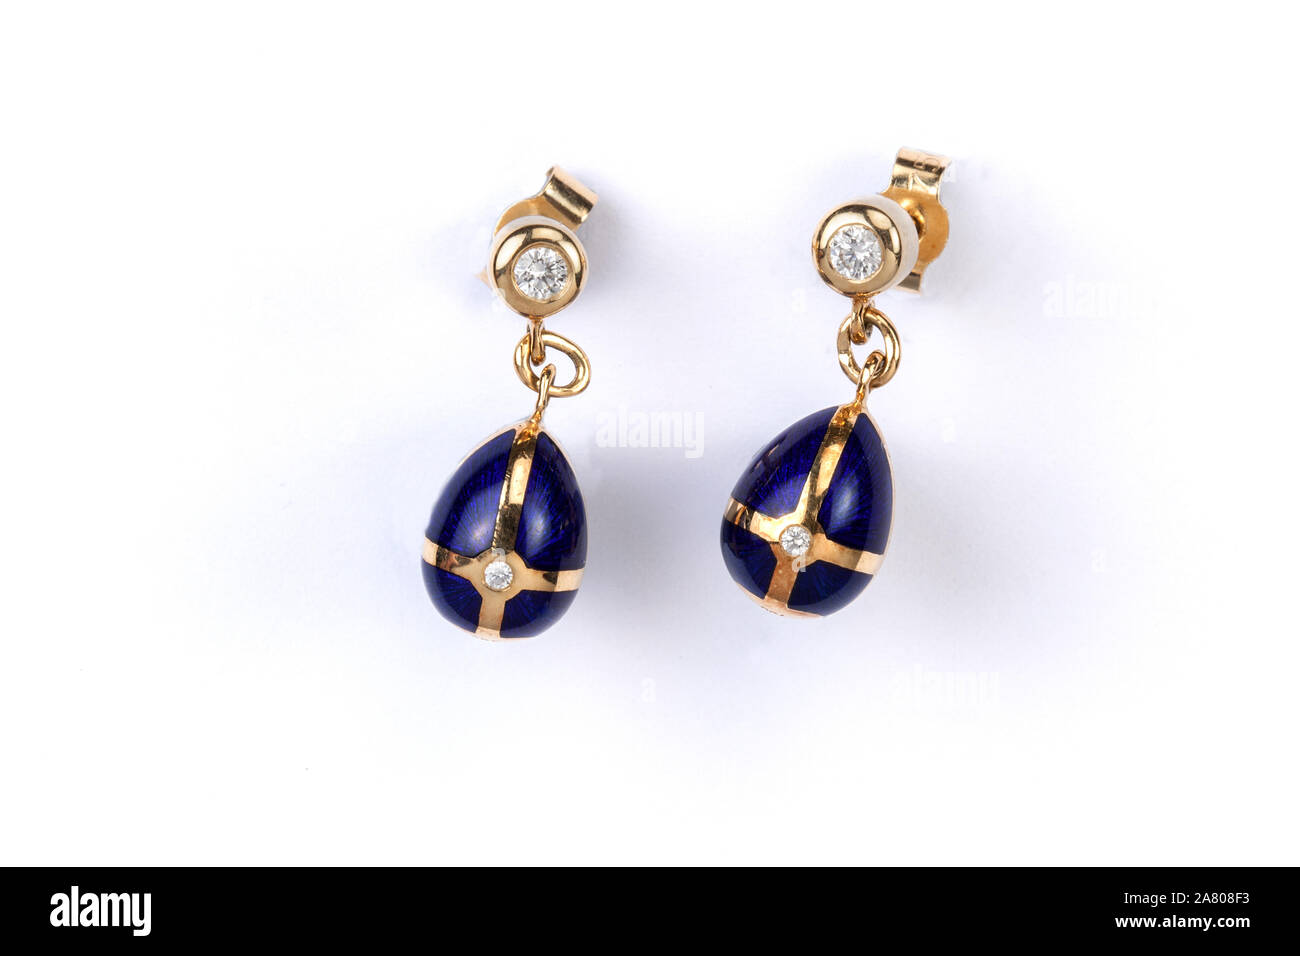 Fabergé gold,diamonds and enamel egg earrings Stock Photo - Alamy